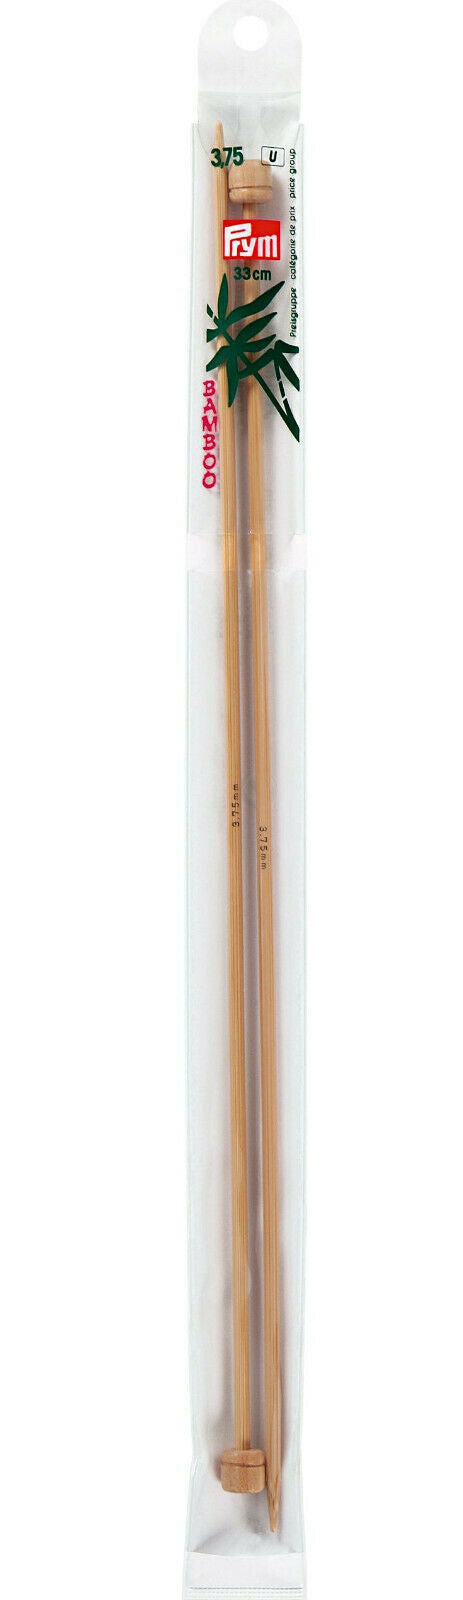 Prym Bamboo Single Pointed Knitting Pins - 2 x 33cm (3.75mm)